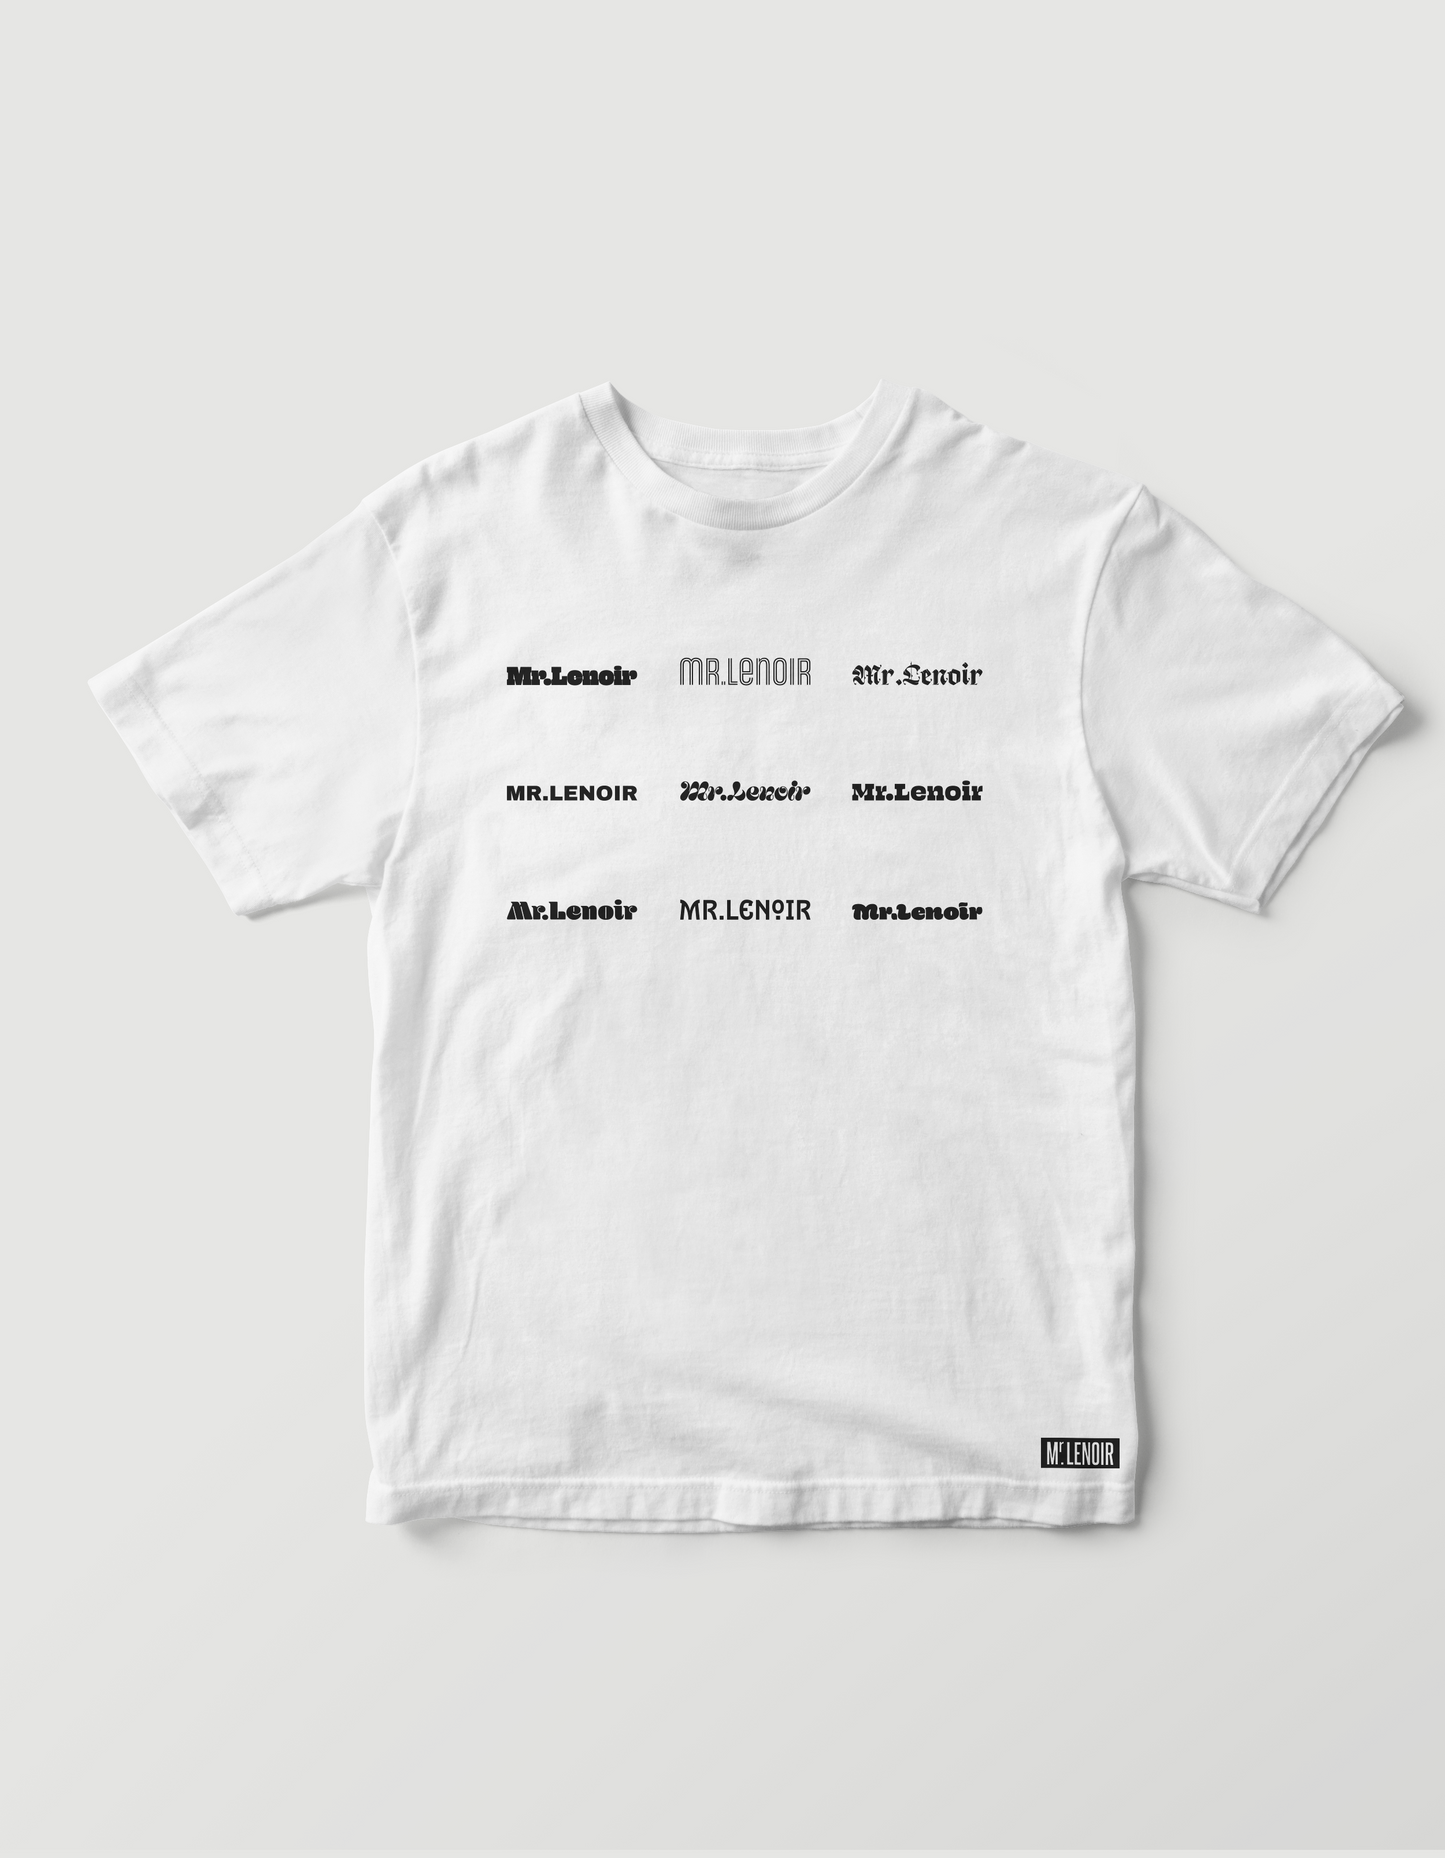 Tee-shirt adulte typographique